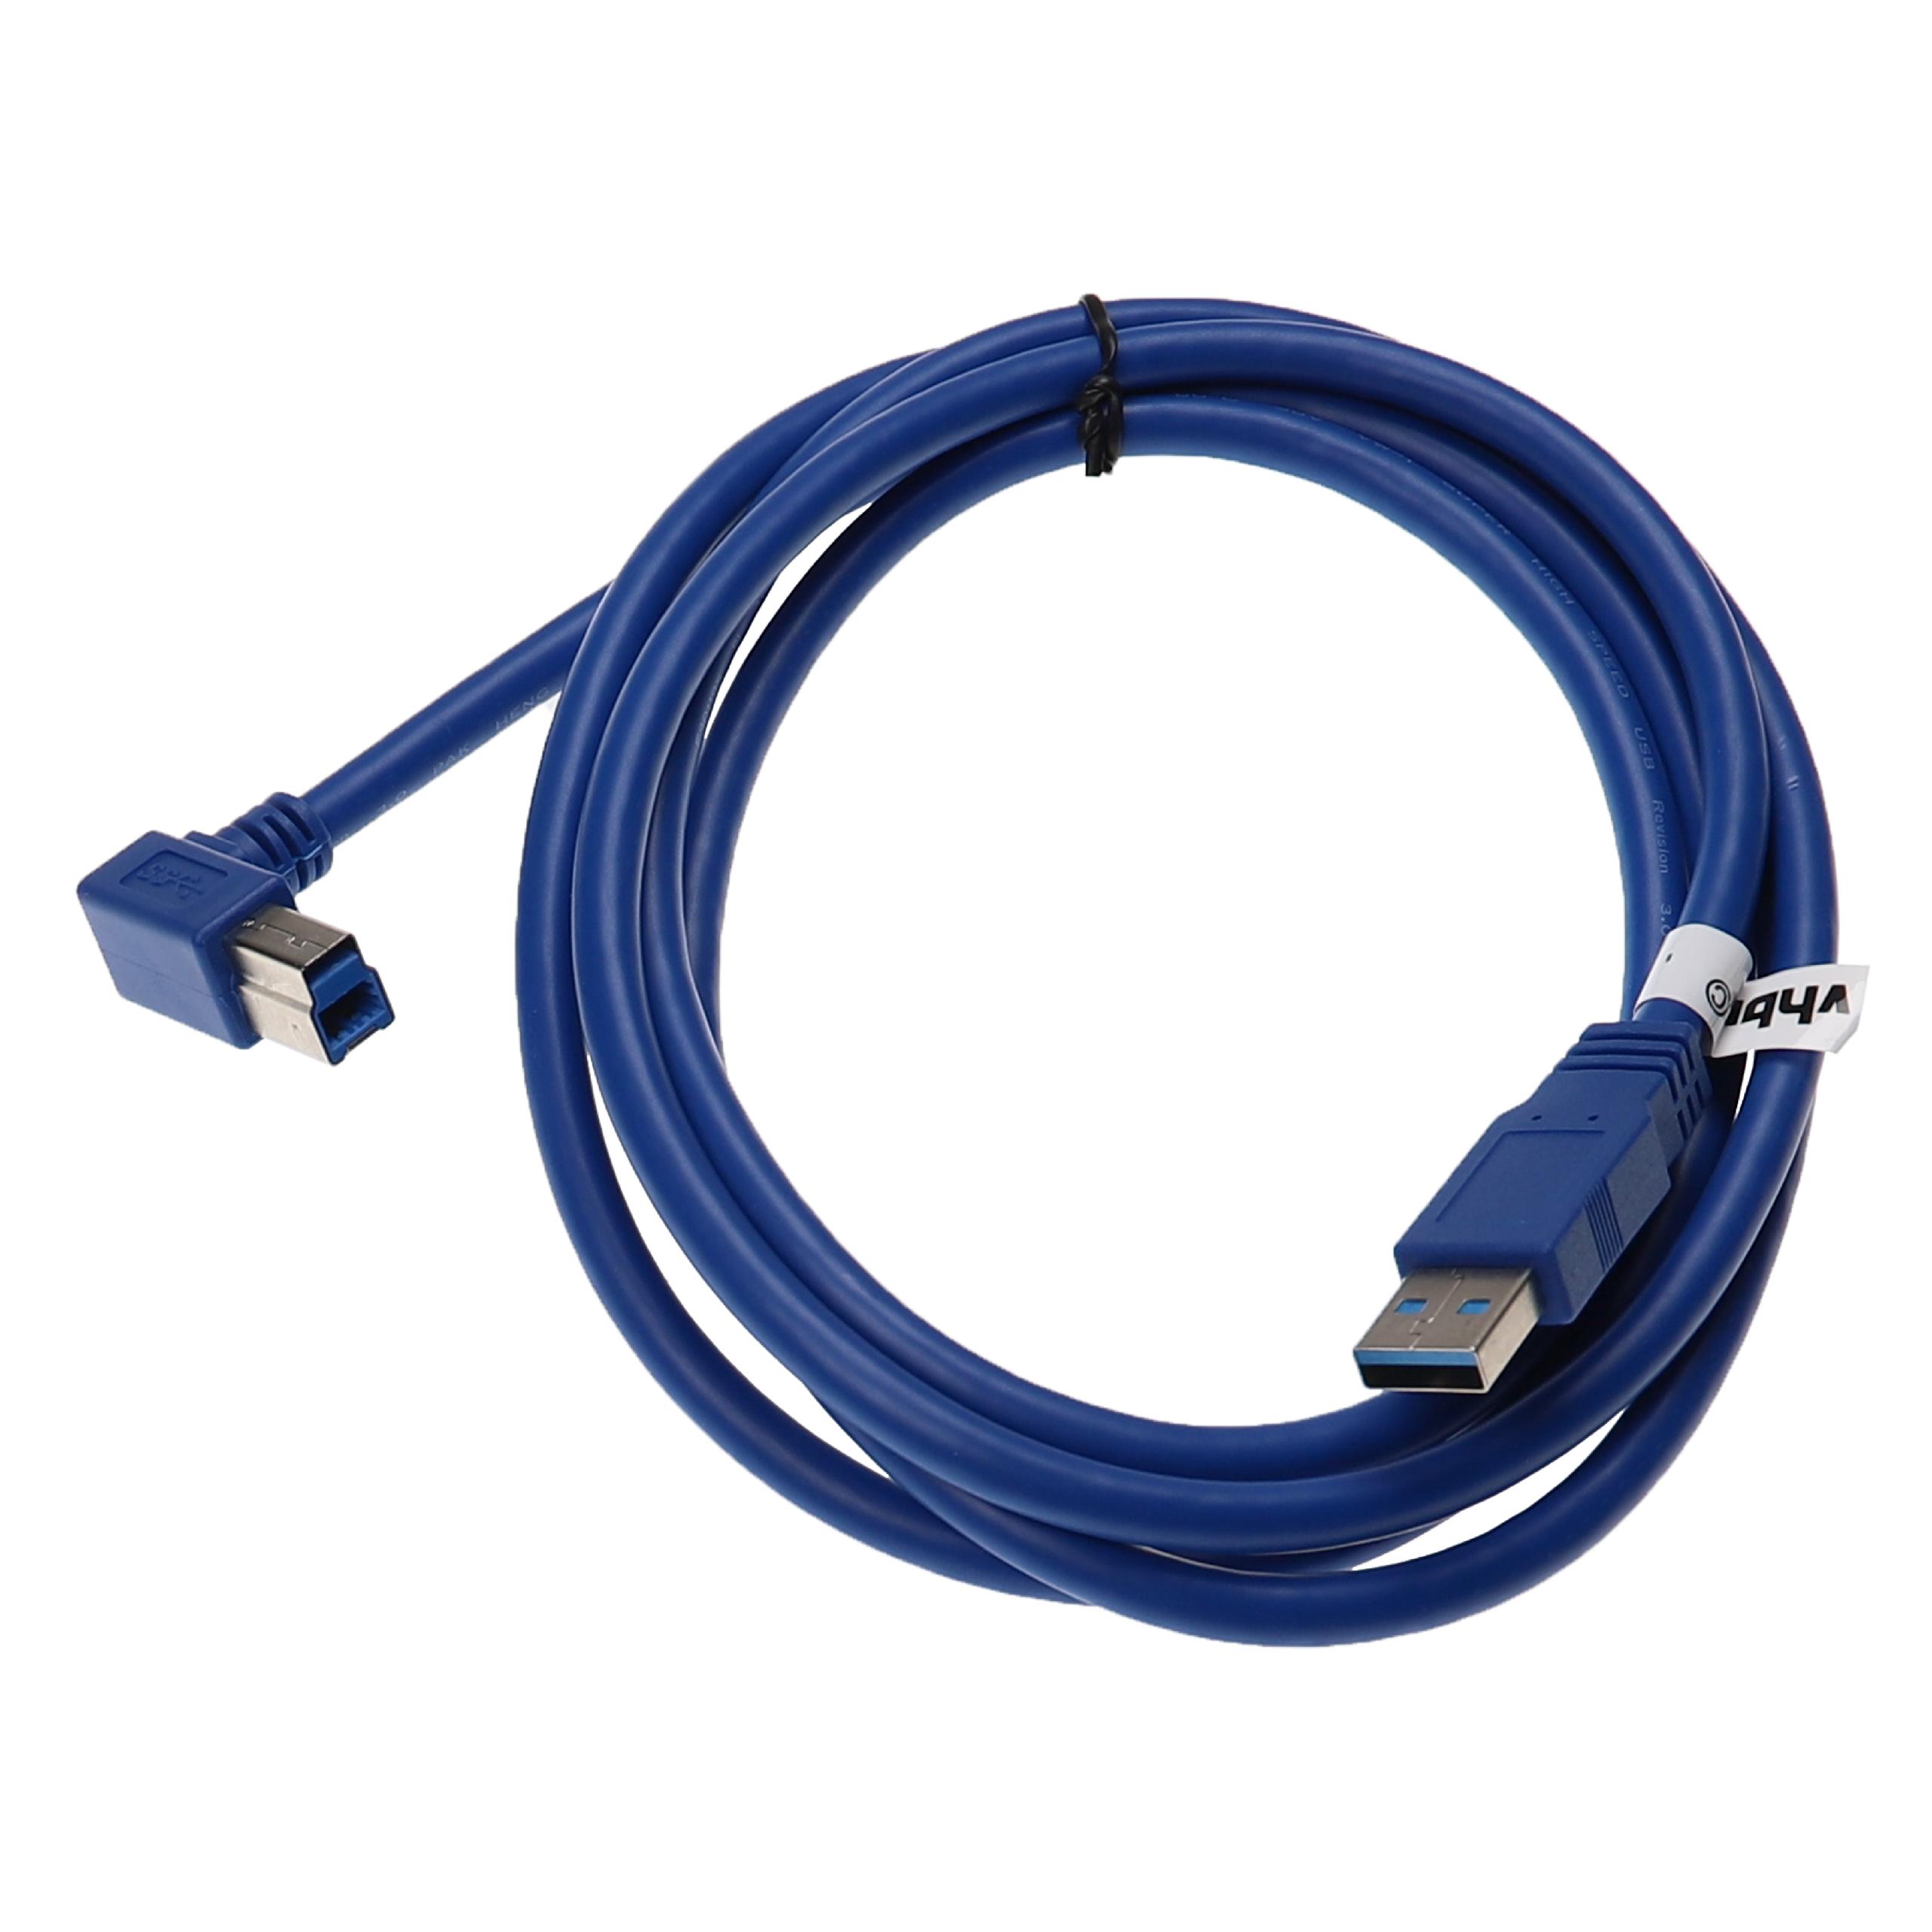 USB 3.0 Kabel Typ A auf Typ B - USB Datenkabel 1,8 m Blau